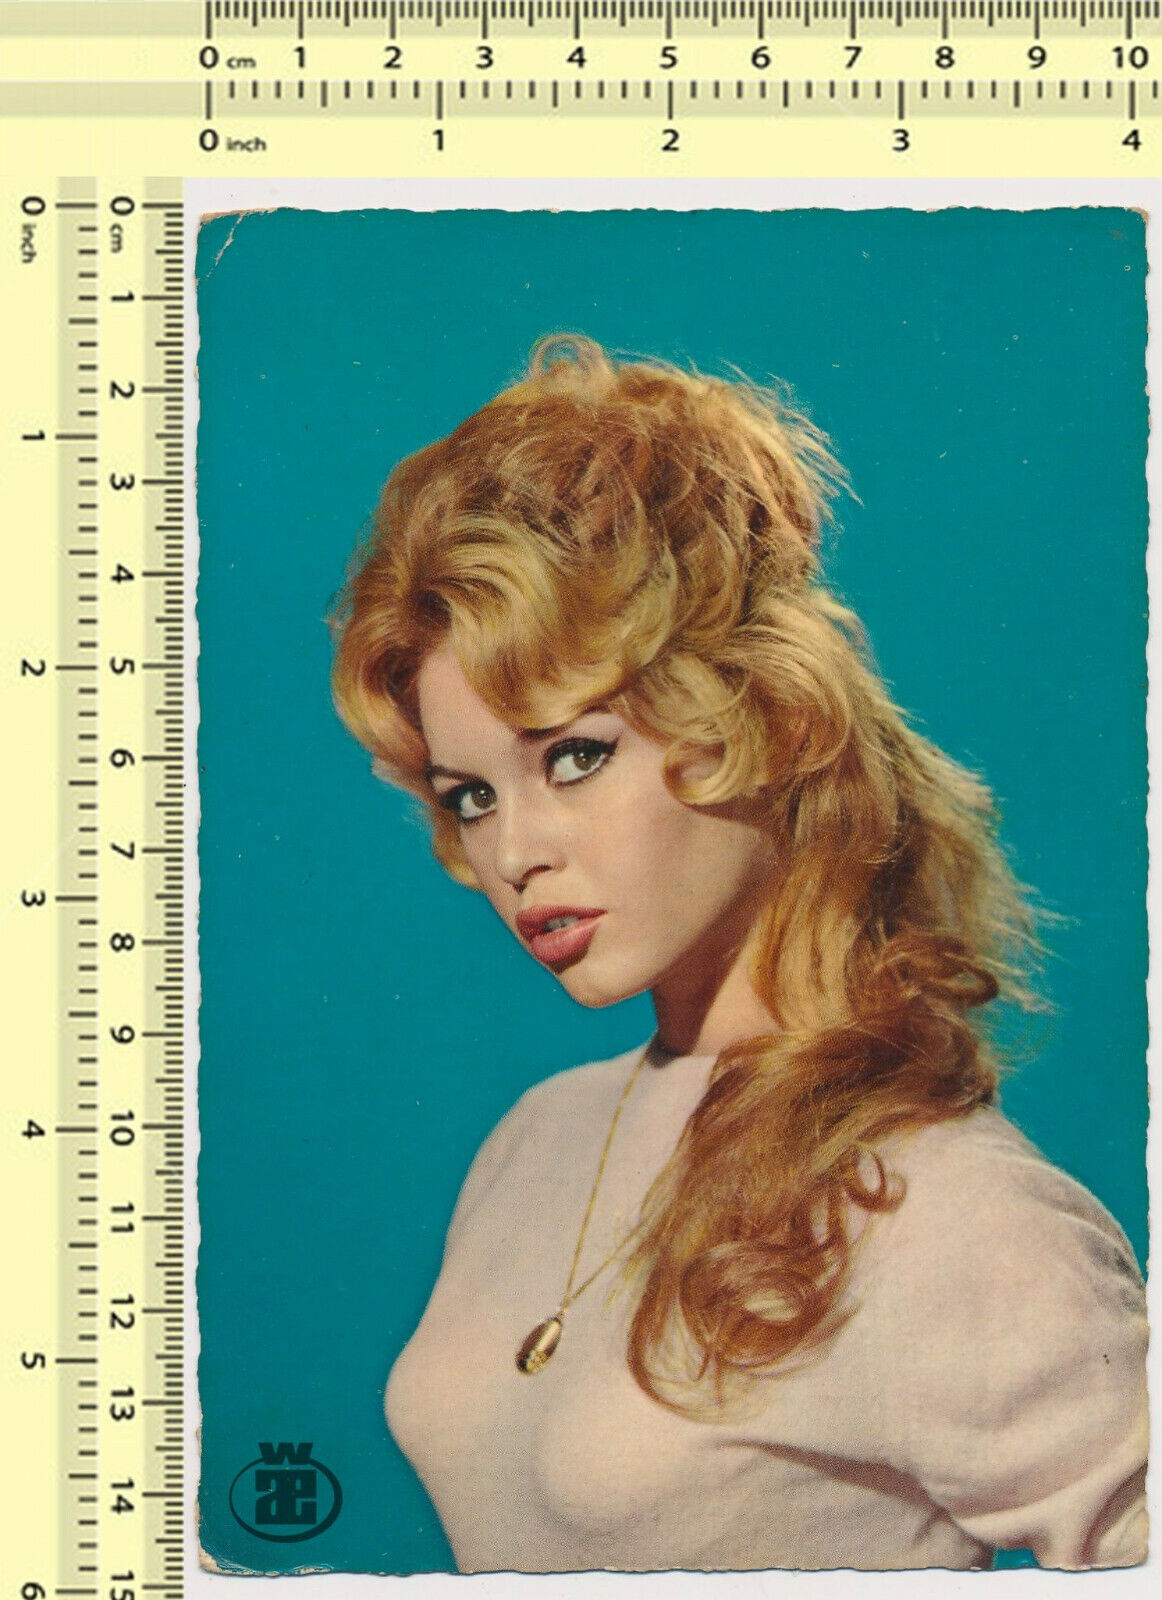 095 Brigitte Bardot - Sam Levin vintage original old photo postcard